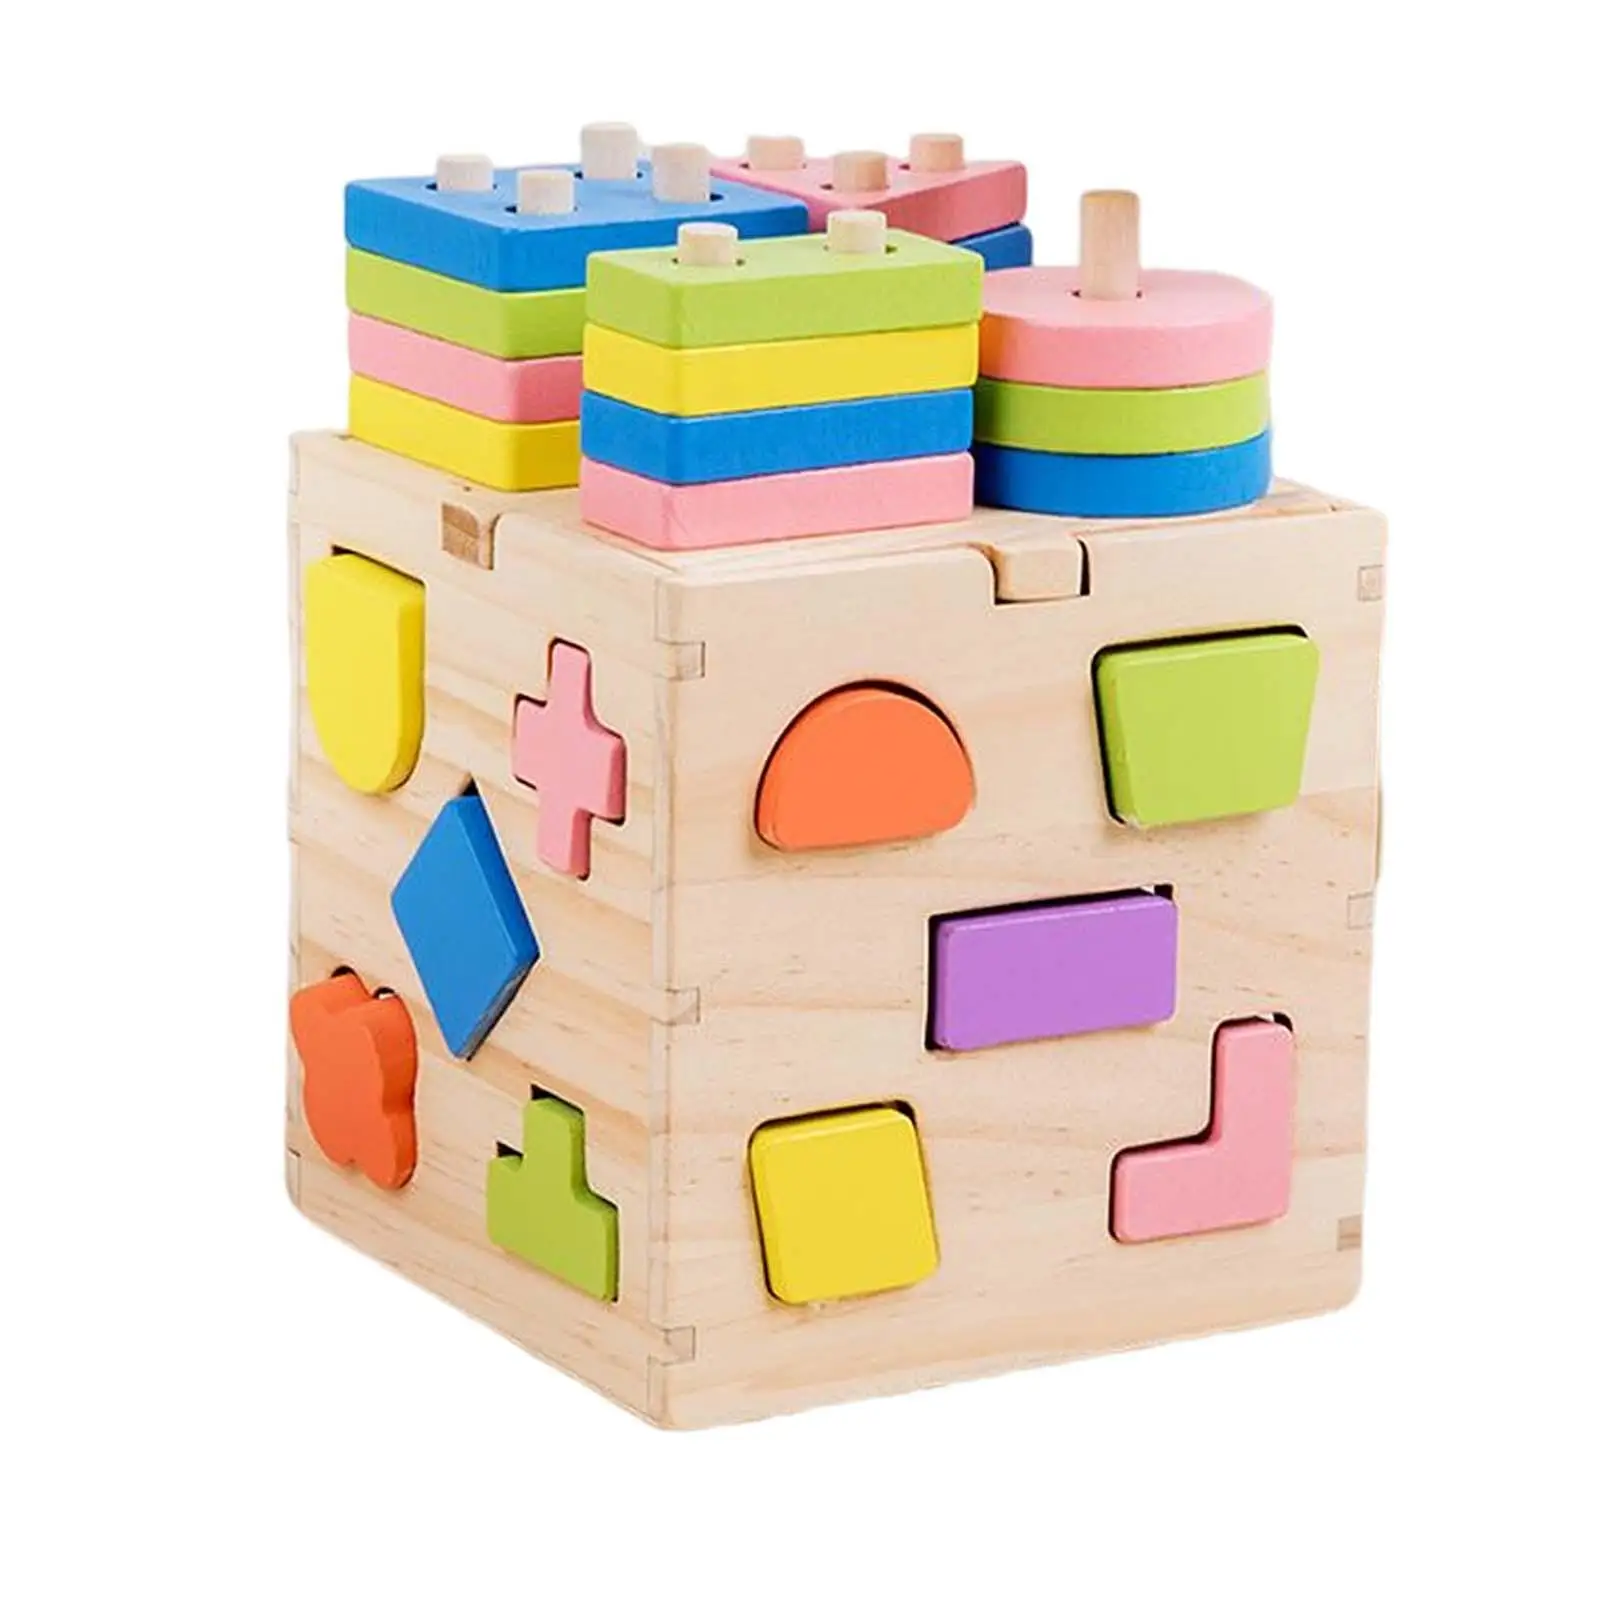 Geometry Shape Toys Educational Learning Toy Learning Shape for Preschool